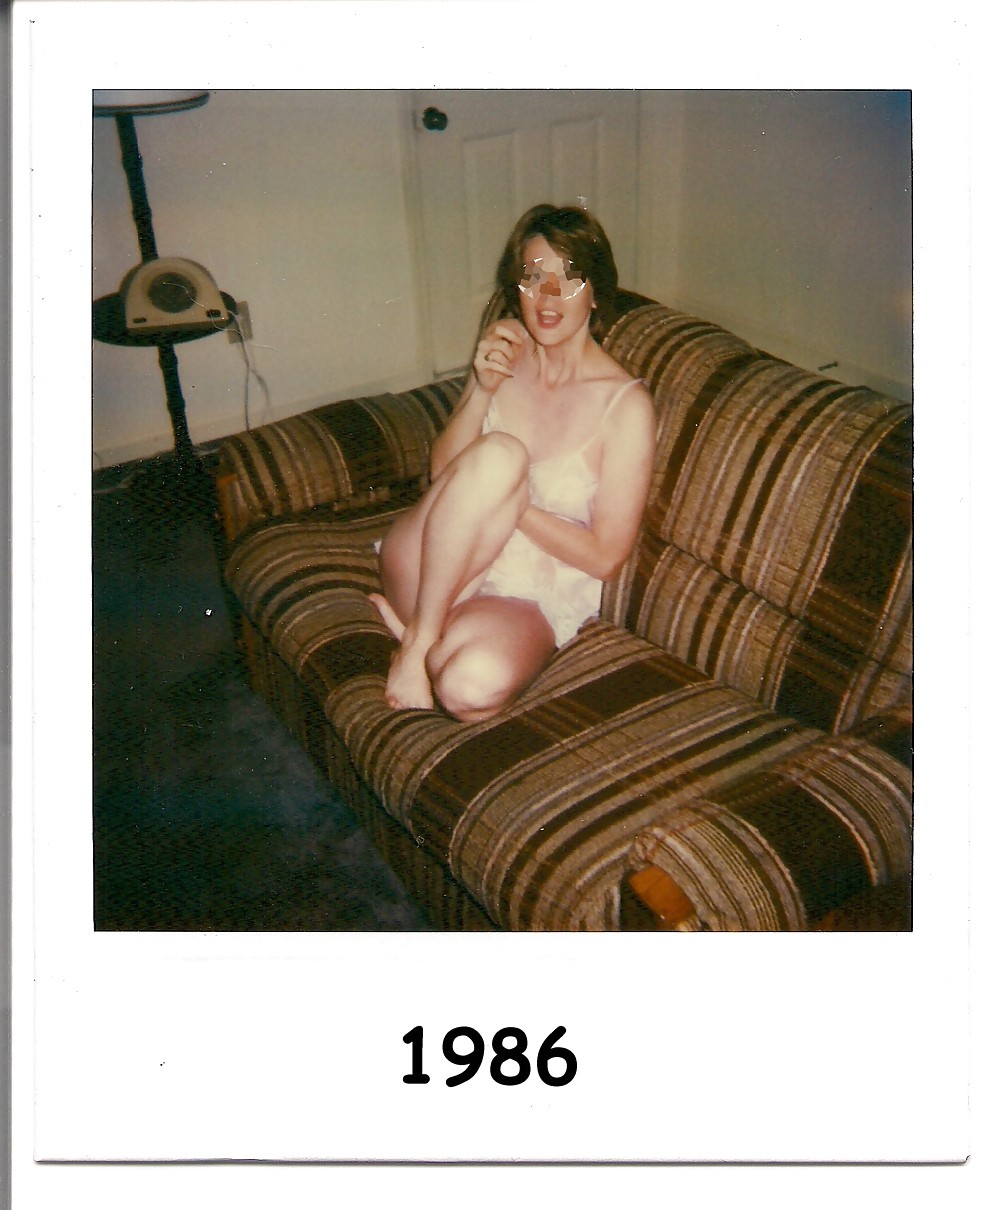 art clement recommends real polaroid amateurs big tits 1980s pic